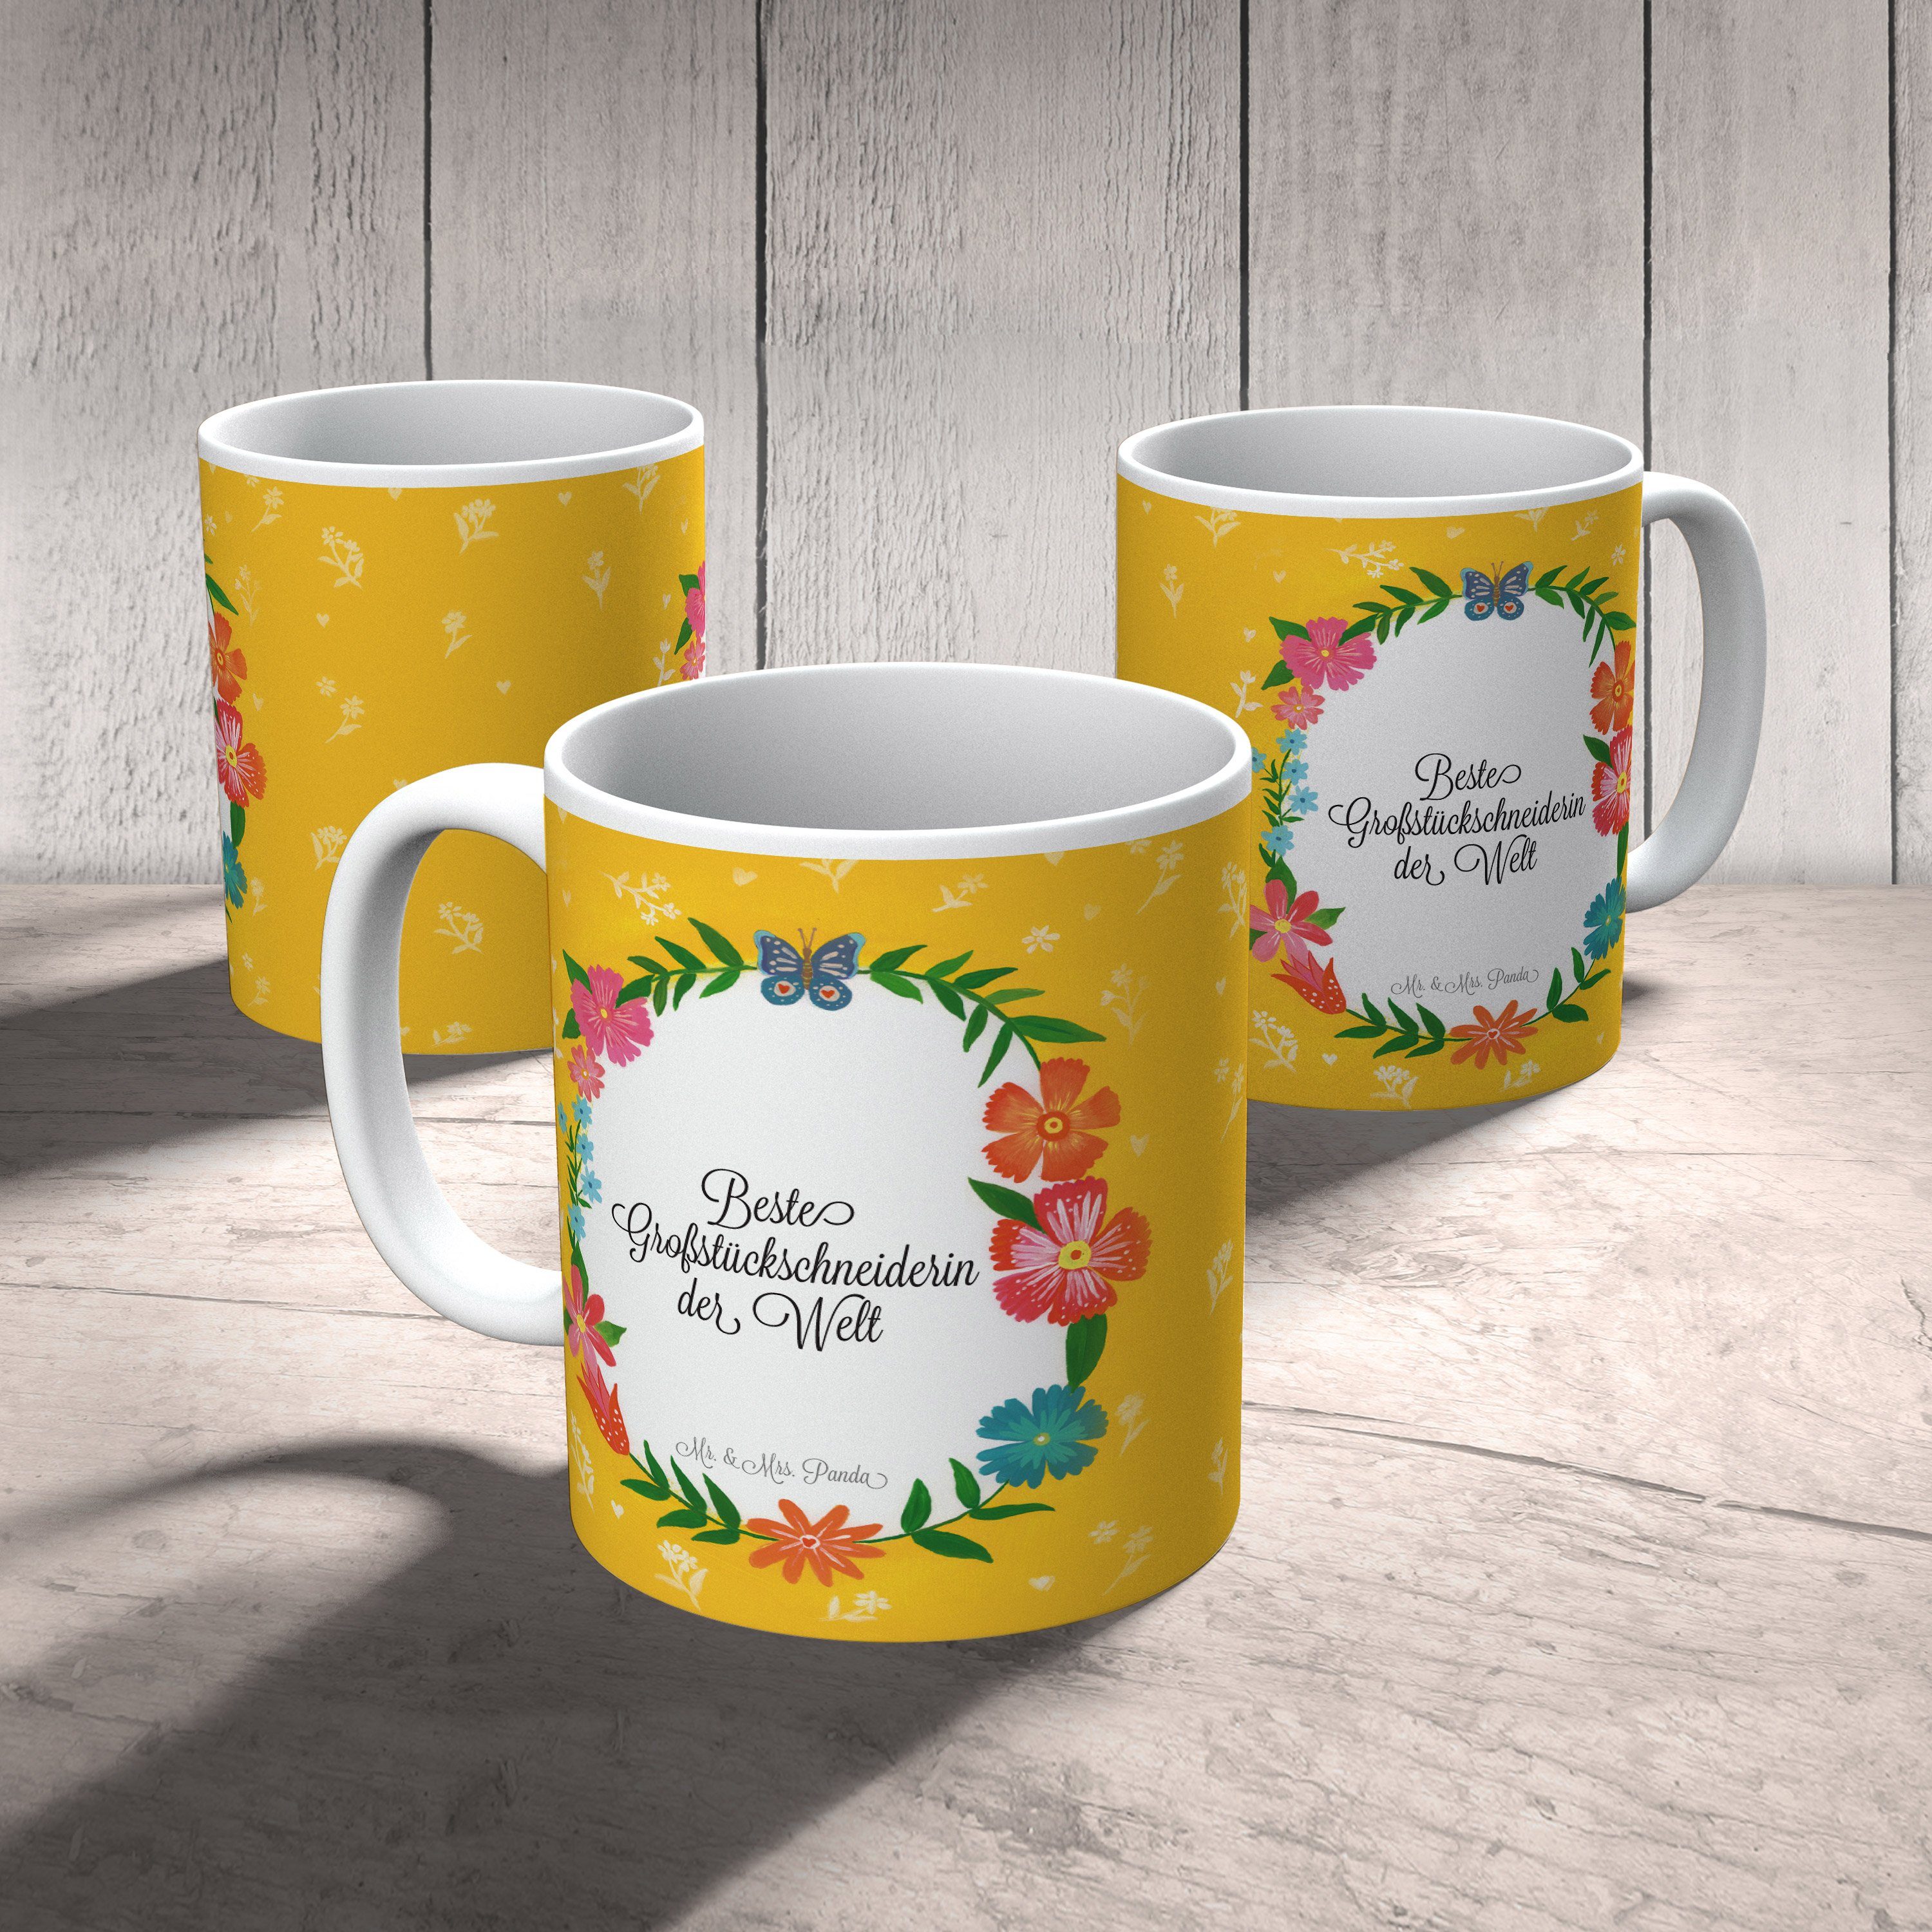 Keramik Kaffeetasse, Tasse Geschenk, Großstückschneiderin Keramiktasse, Mr. - Mrs. & Schenken, Panda